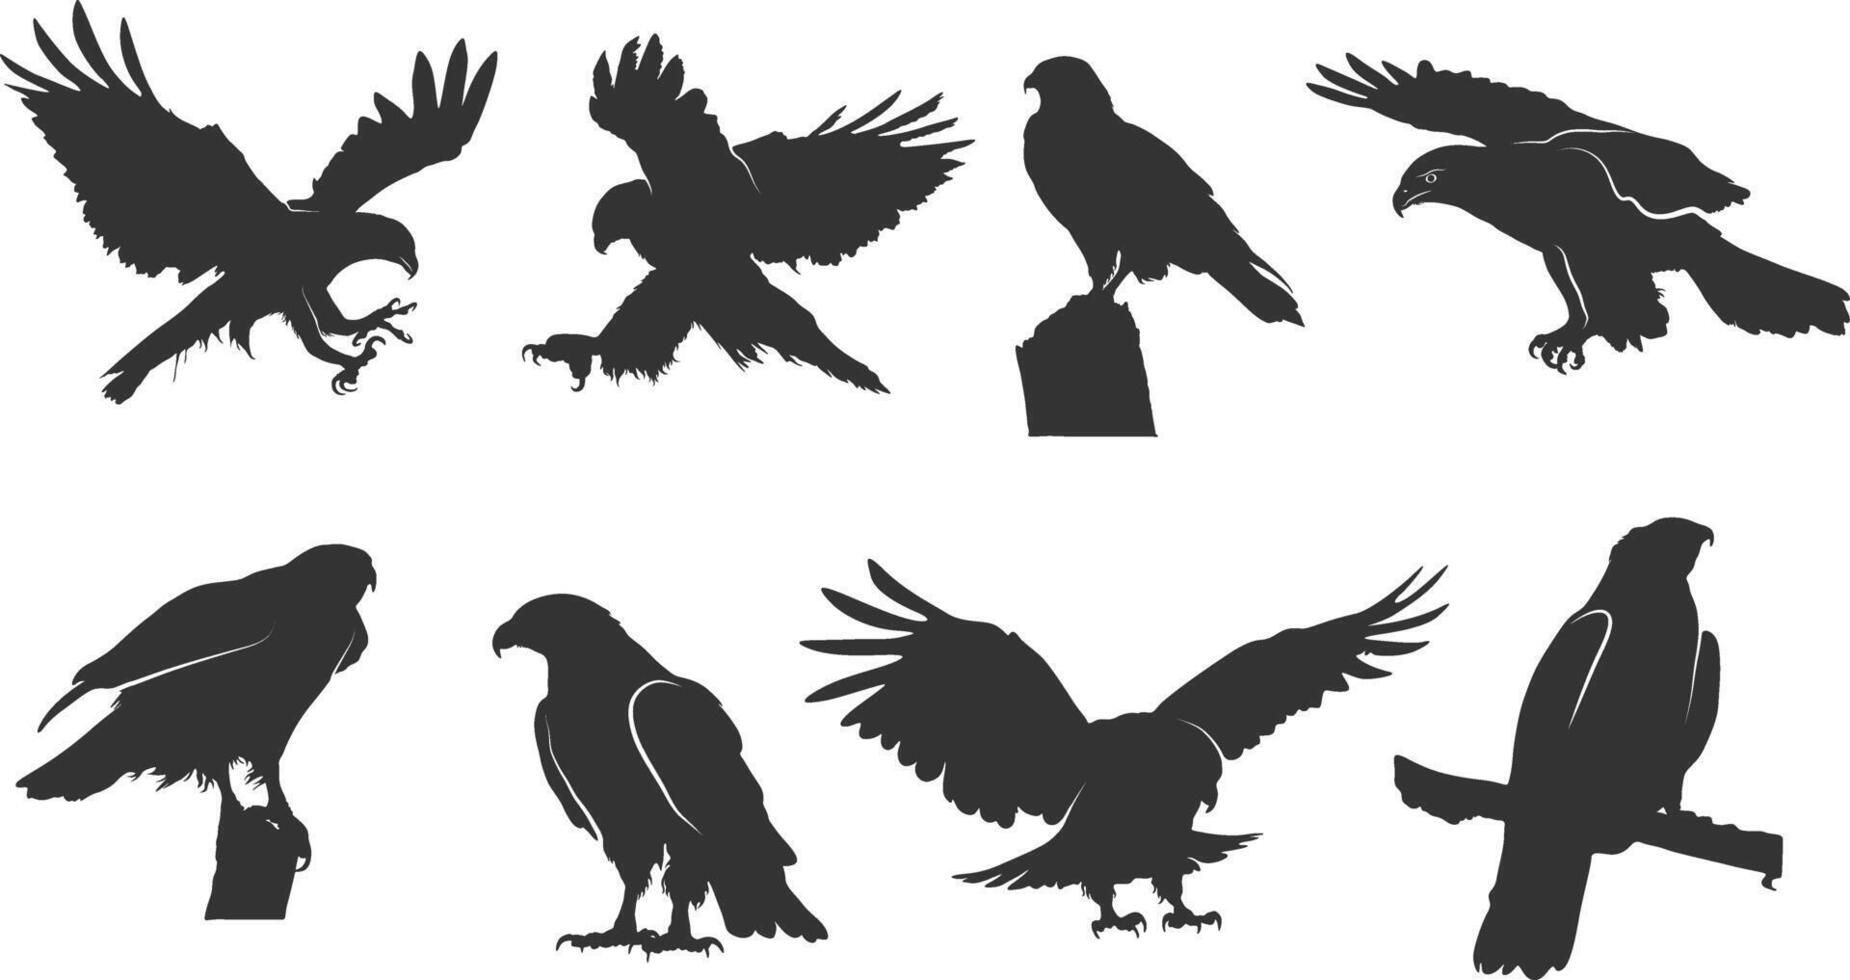 Hawk silhouettes, Flying hawk silhouette, Tribal hawk silhouette, Hawk vector illustration